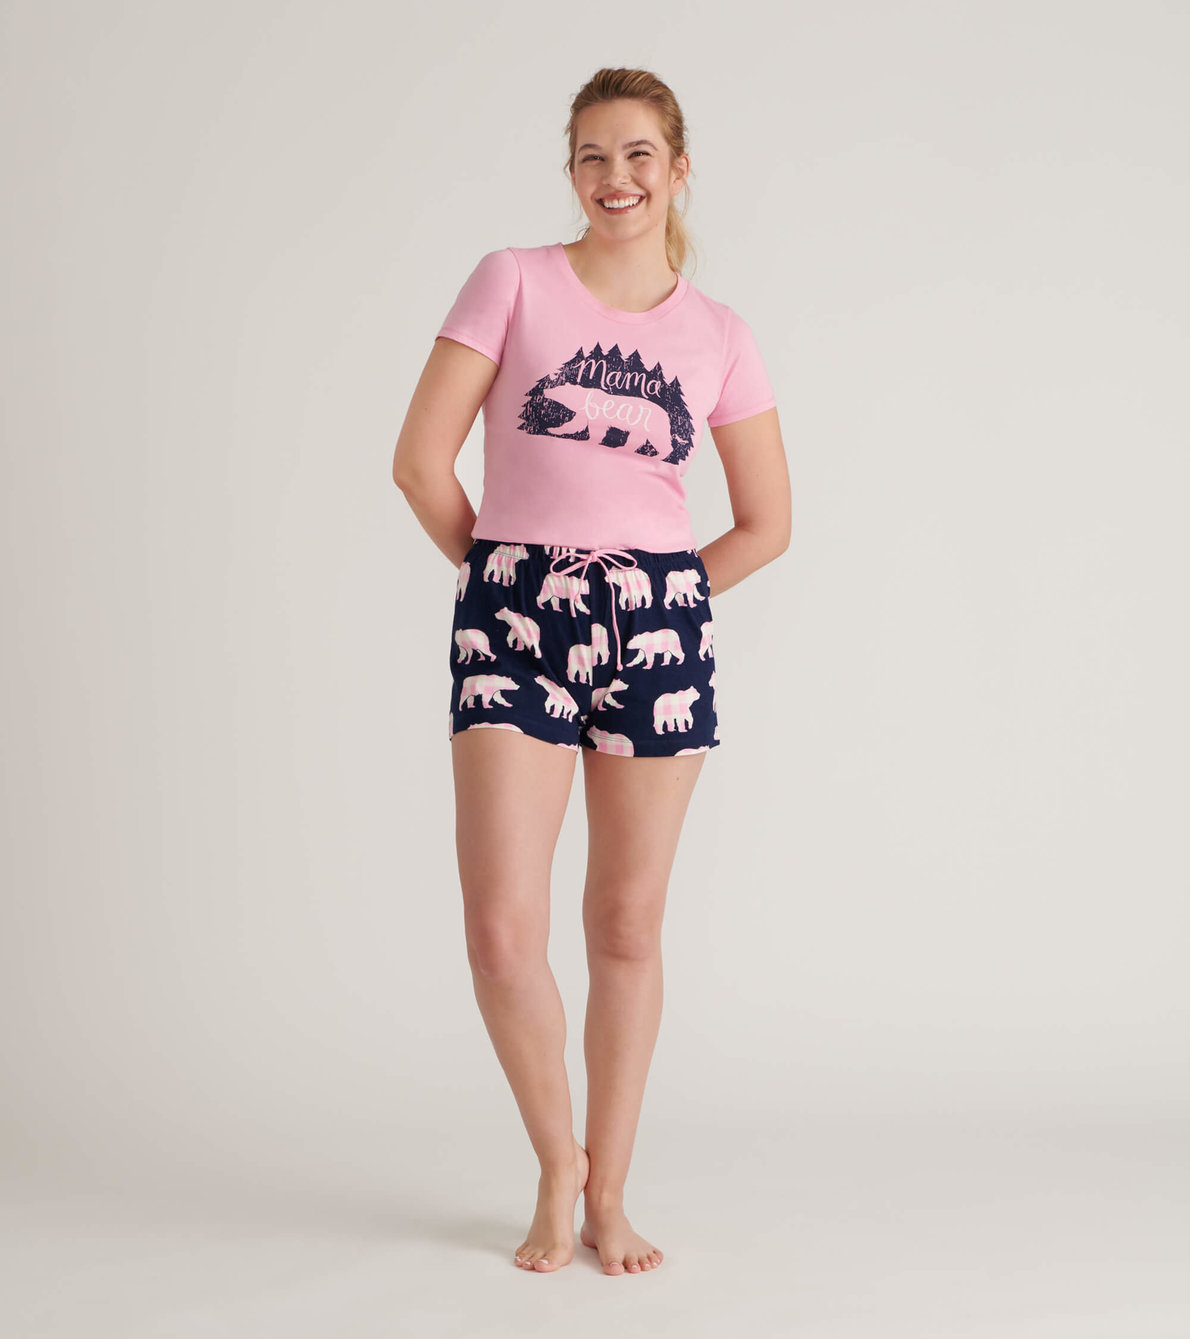 View larger image of Woods Mama Bear Women's Pajama T-Shirt